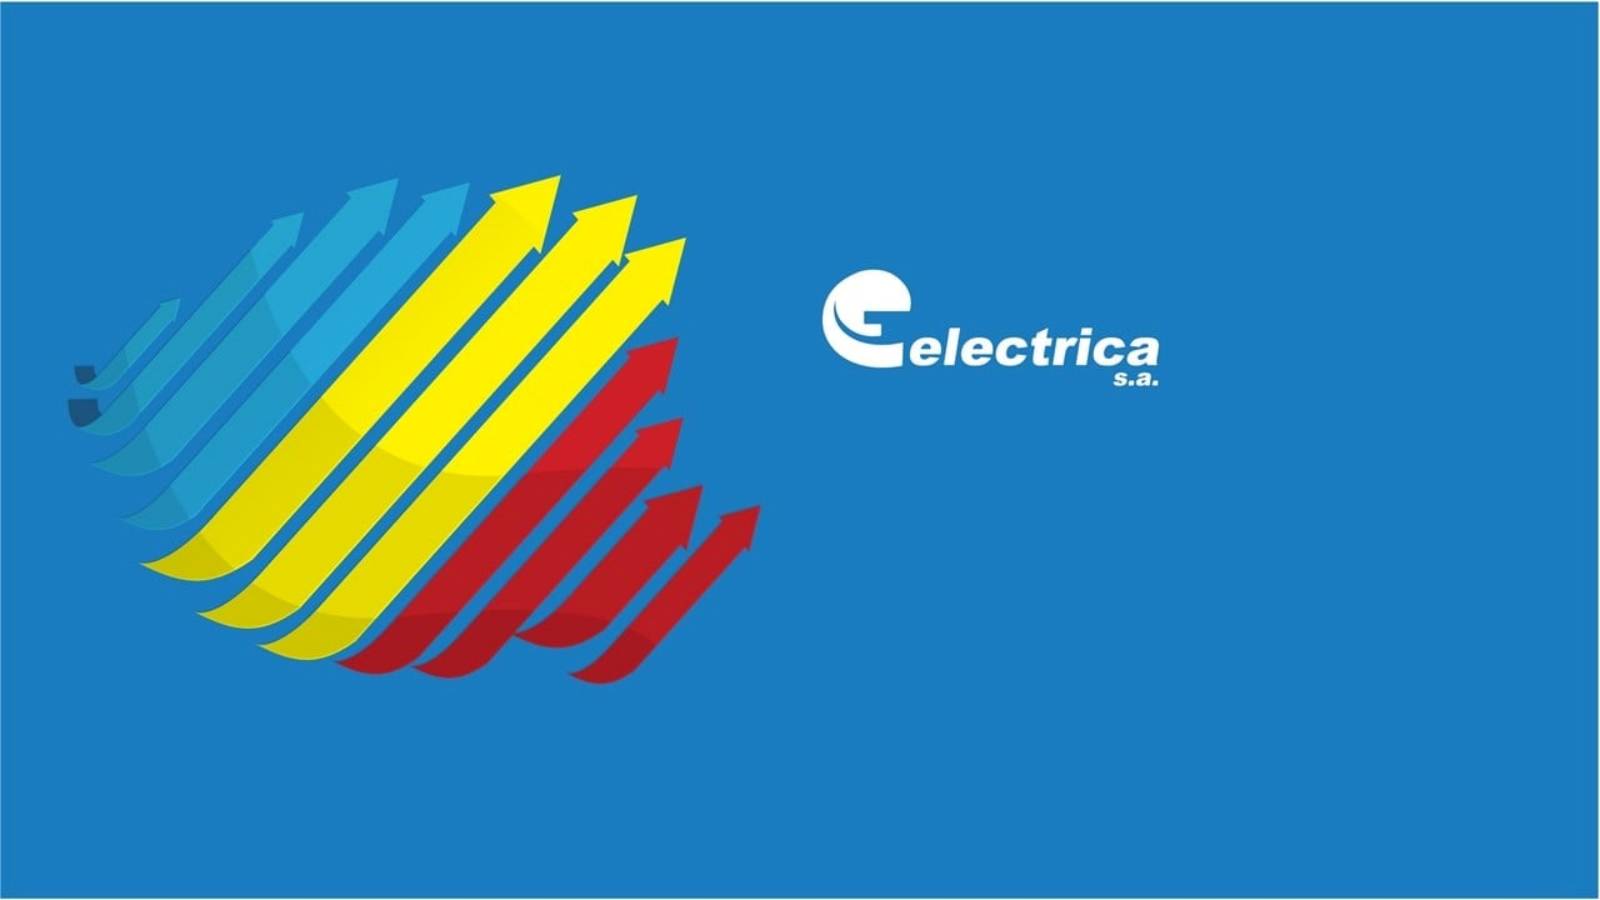 Electrica Cerinta Oficiala ULTIM MOMENT Informare IMPORTANTA Clientii Romani